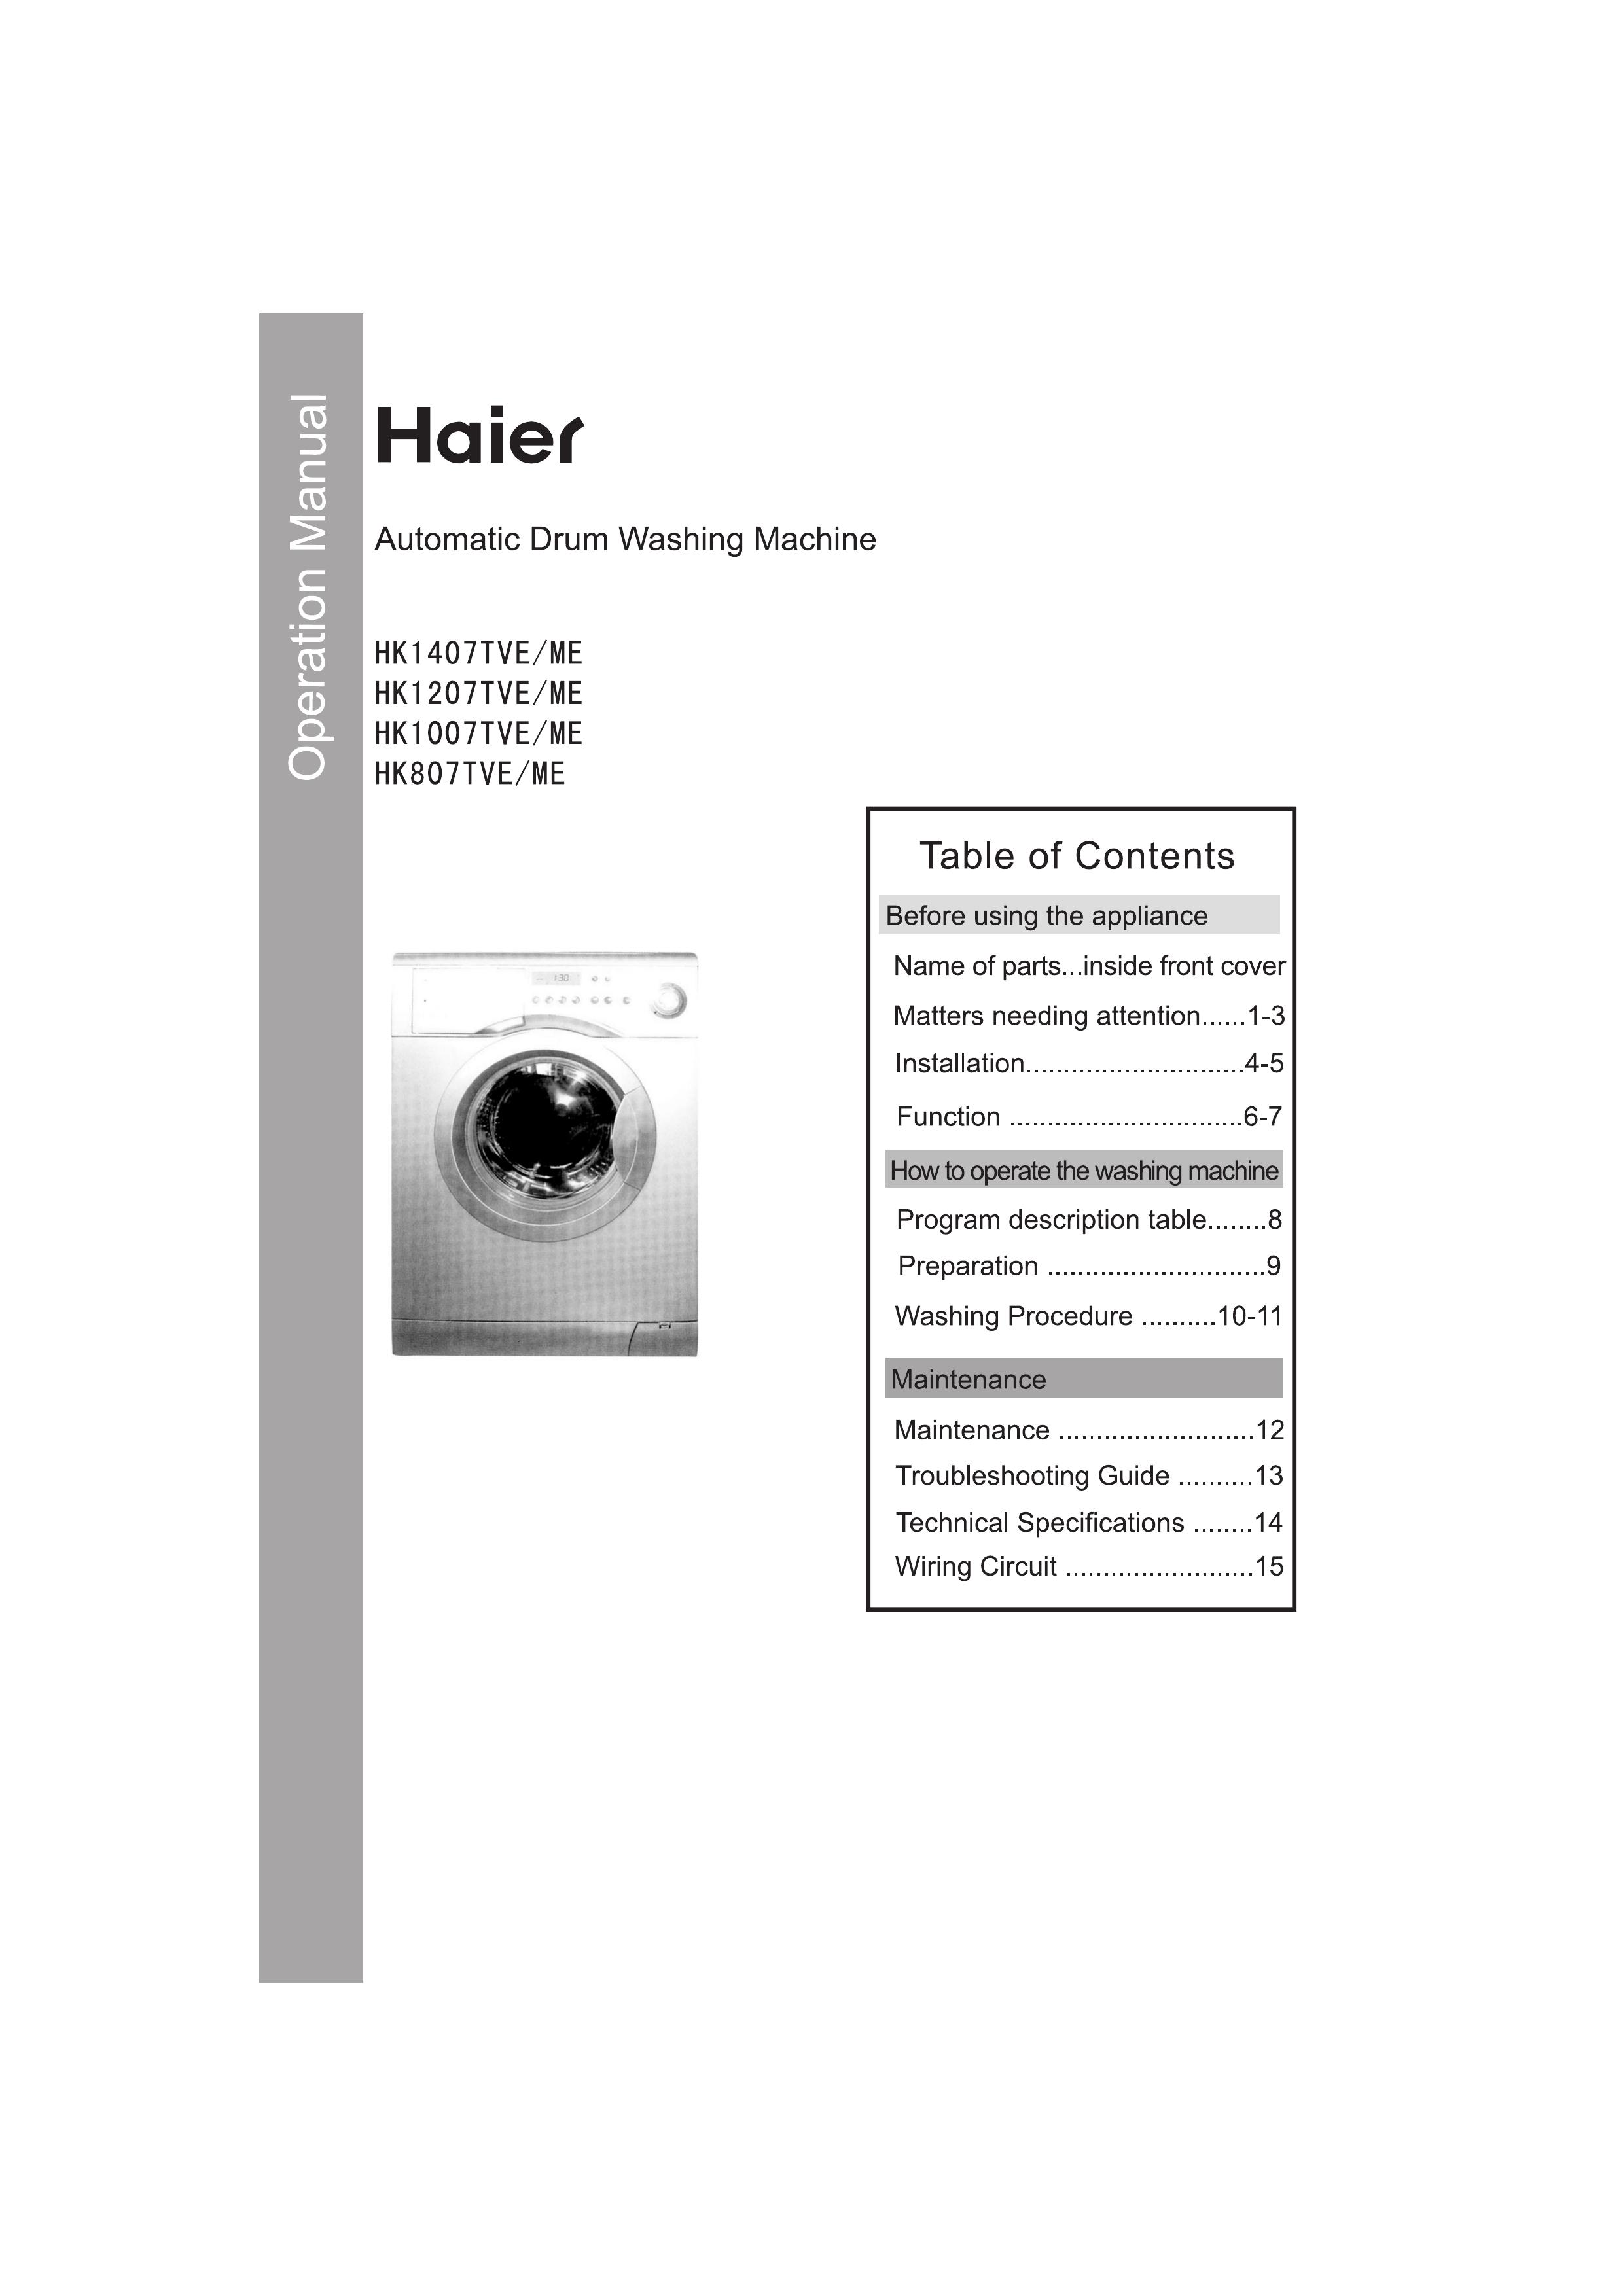 Haier HK1007TVE/ME Washer User Manual